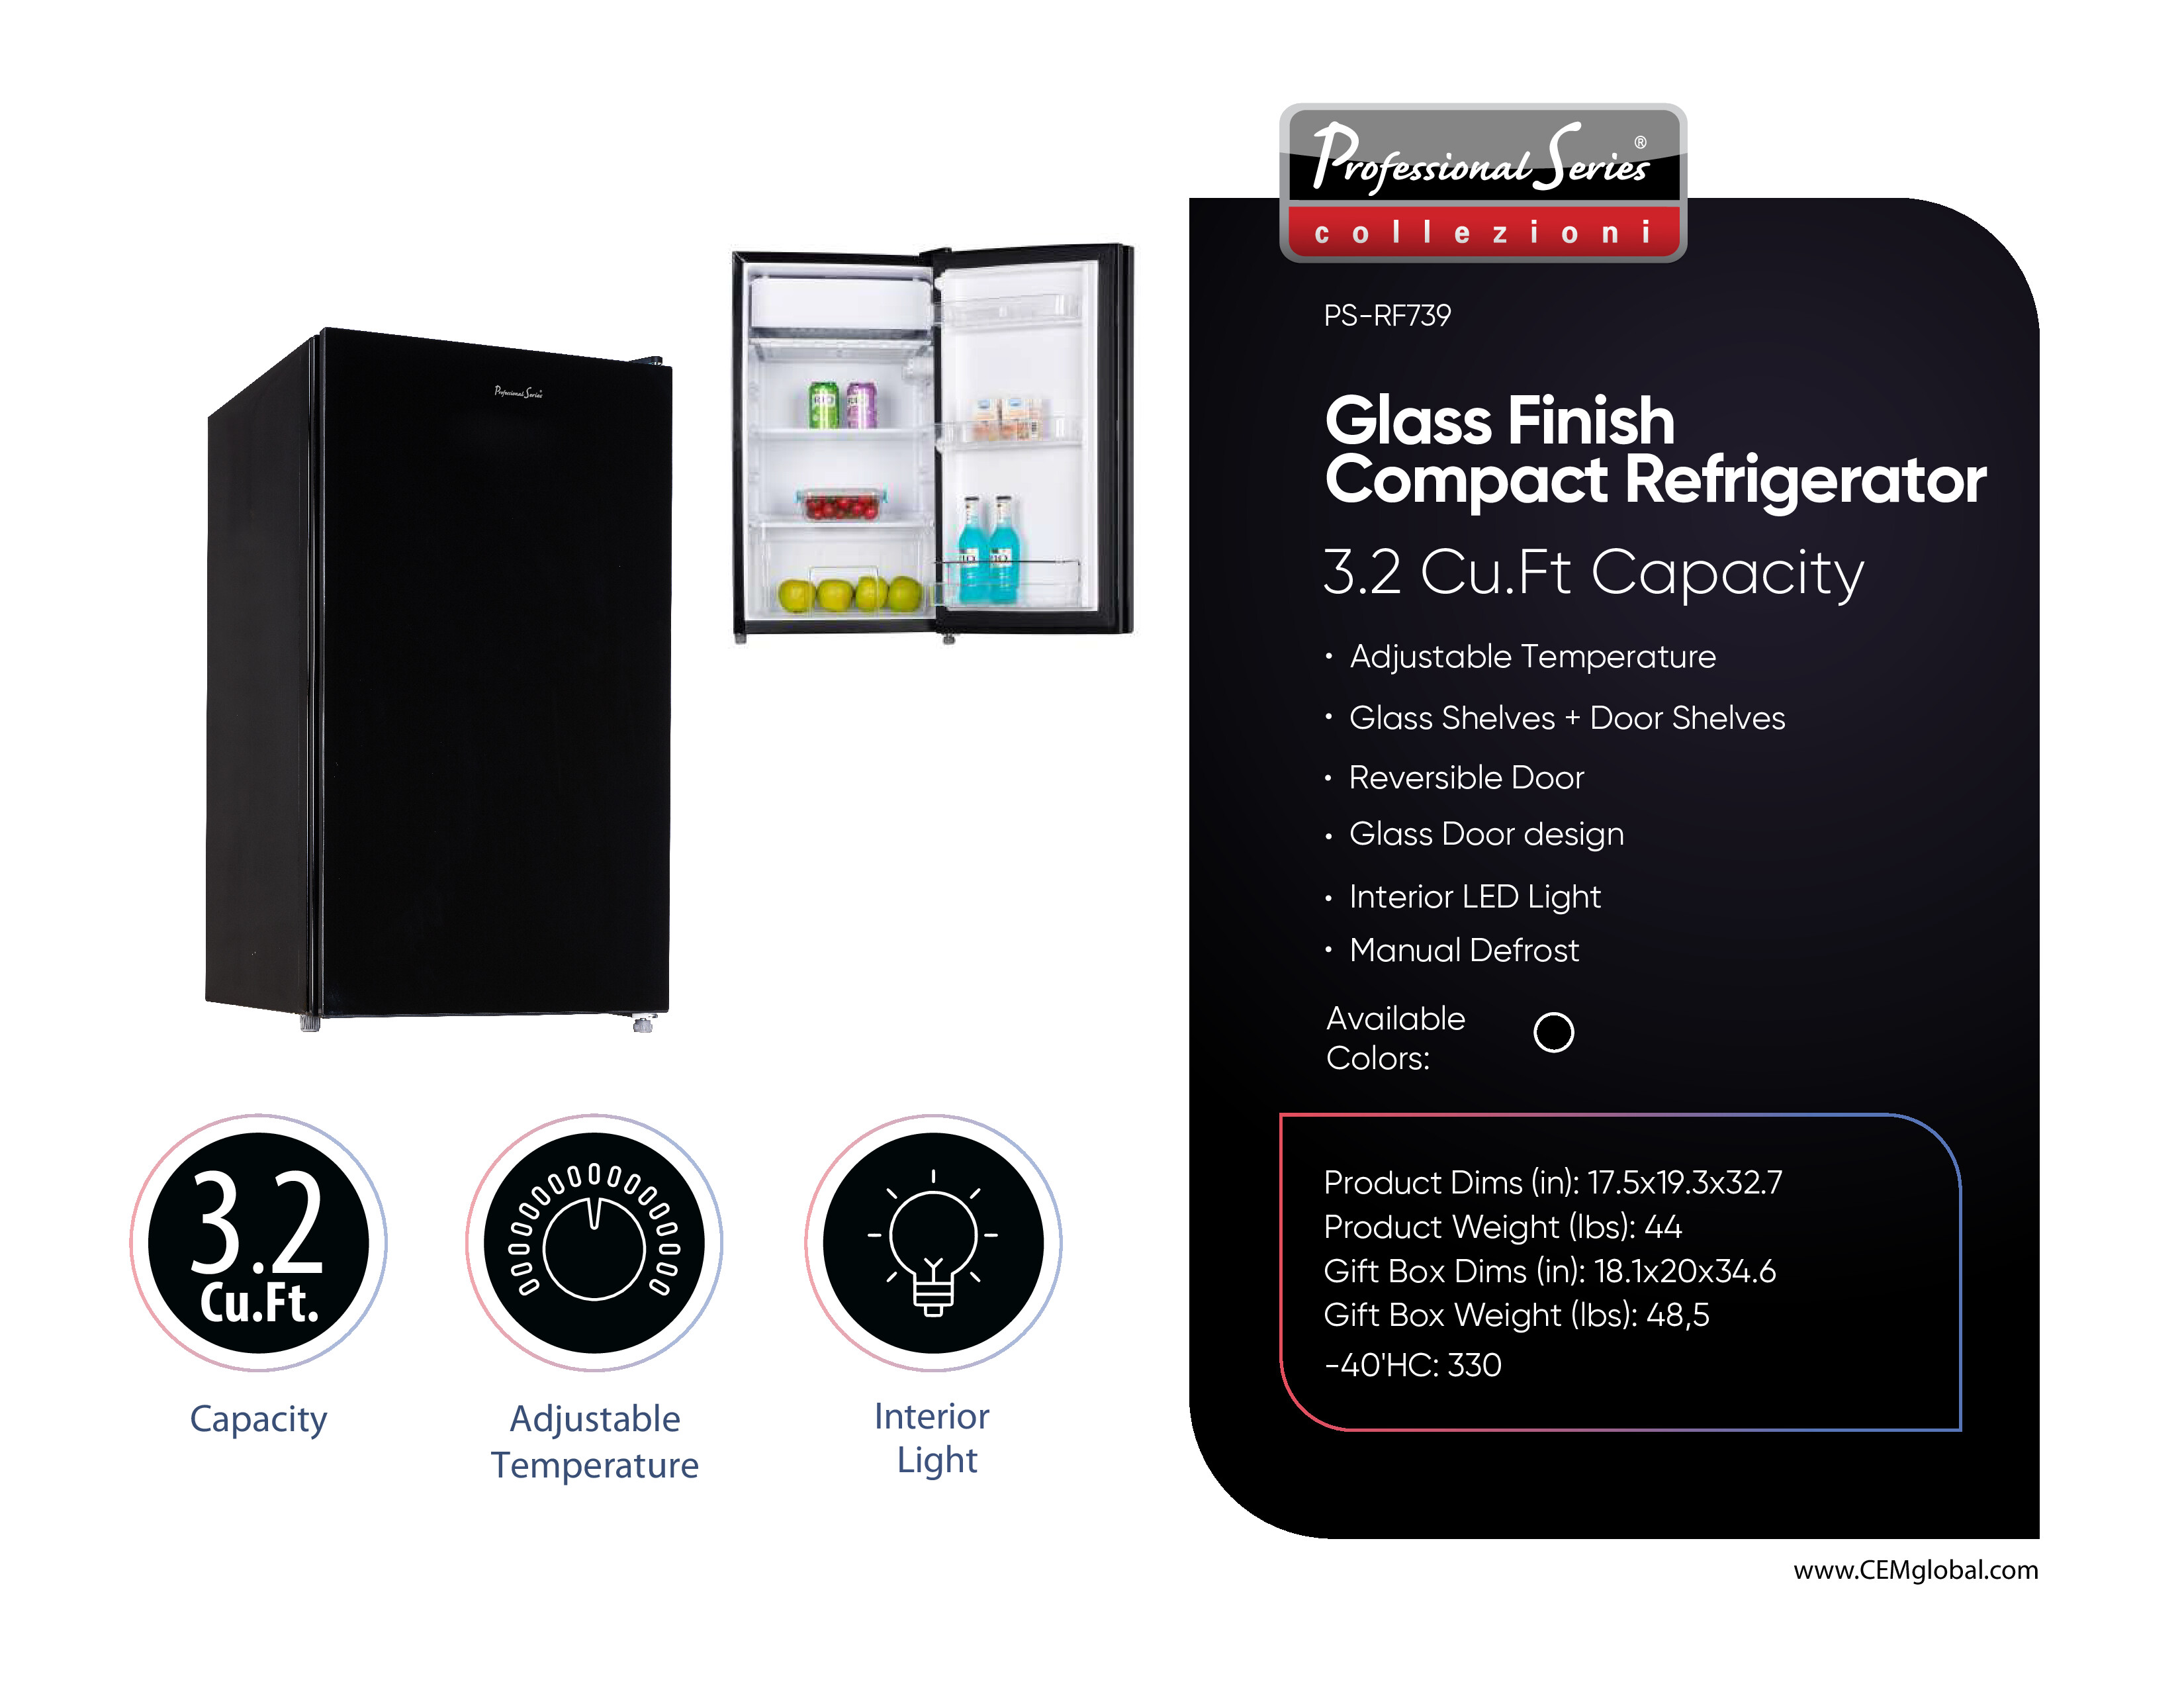 Glass Finish Compact Refrigerator 3.2 Cu.Ft.